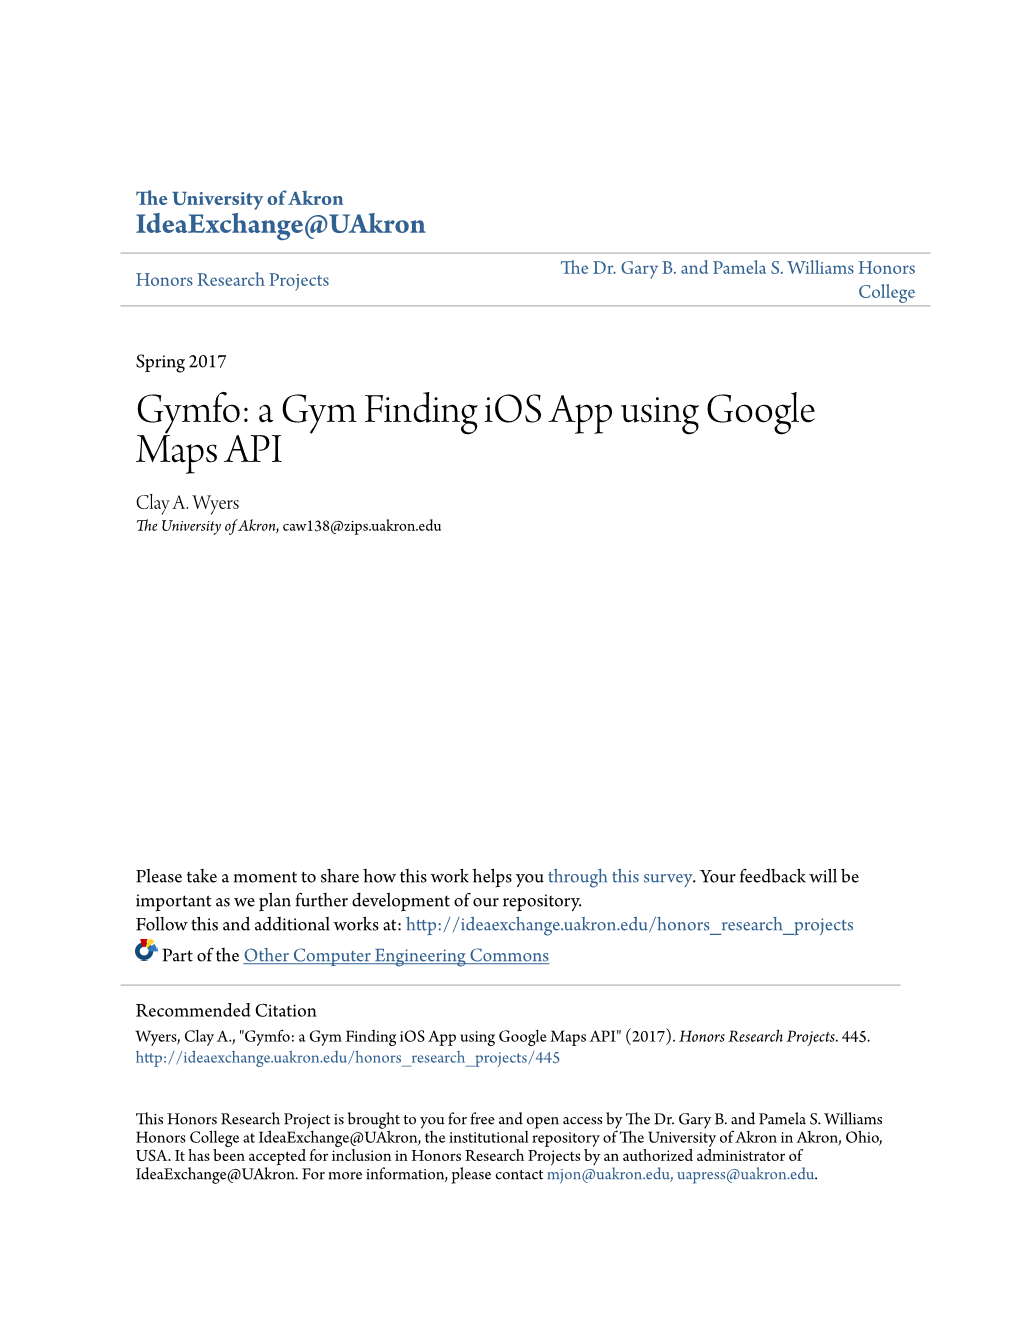 Gymfo: a Gym Finding Ios App Using Google Maps API Clay A